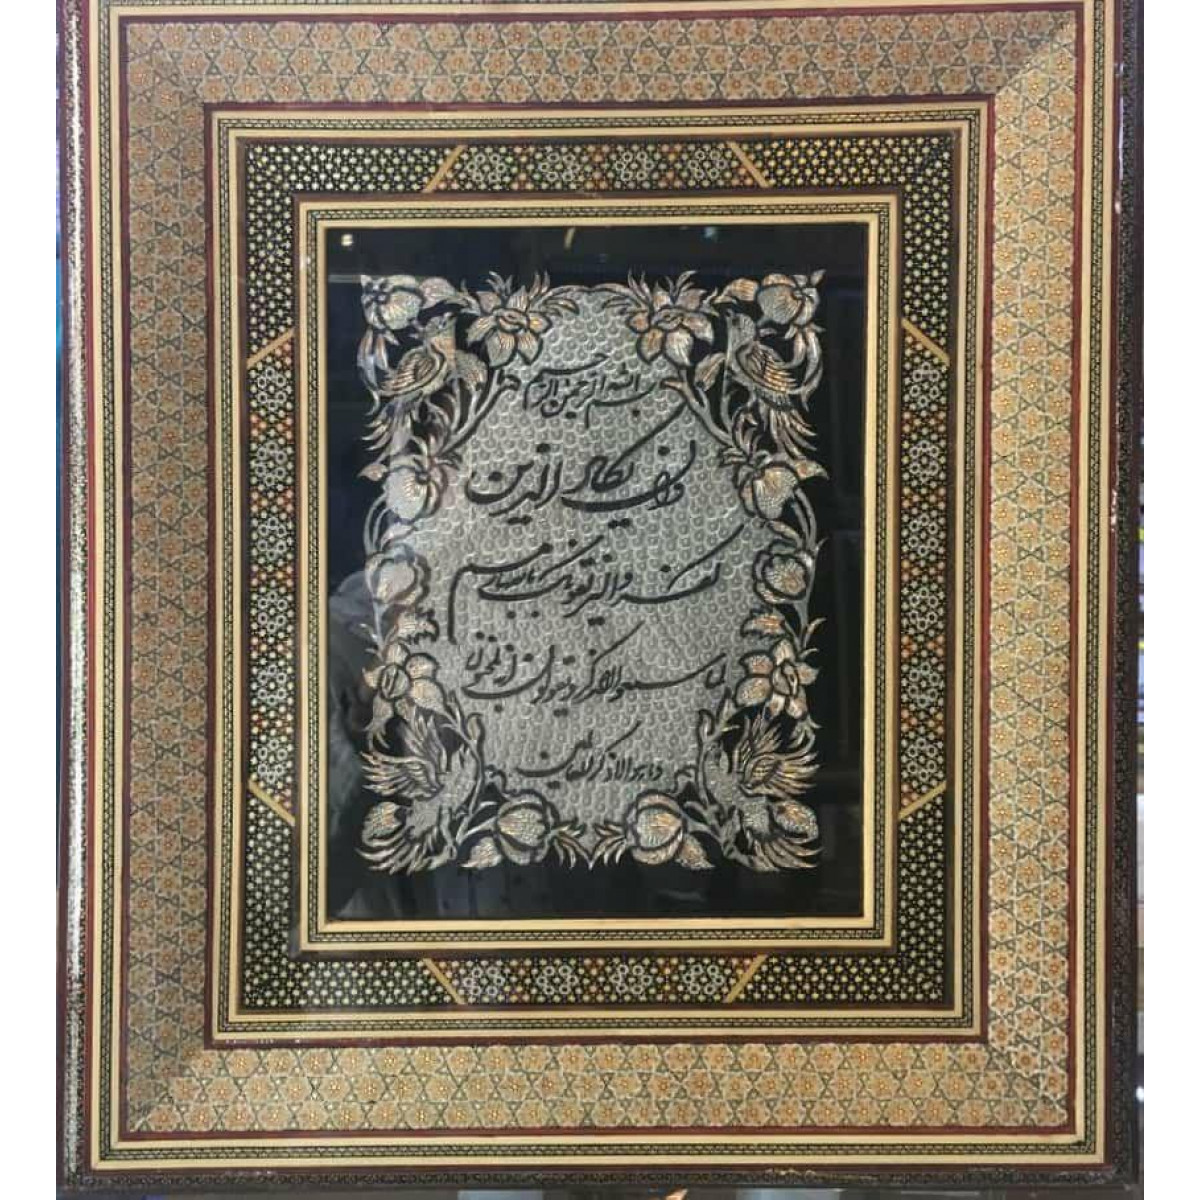 Khatam & Miniature on Framed Mirror - HKH3021-Persian Handicrafts